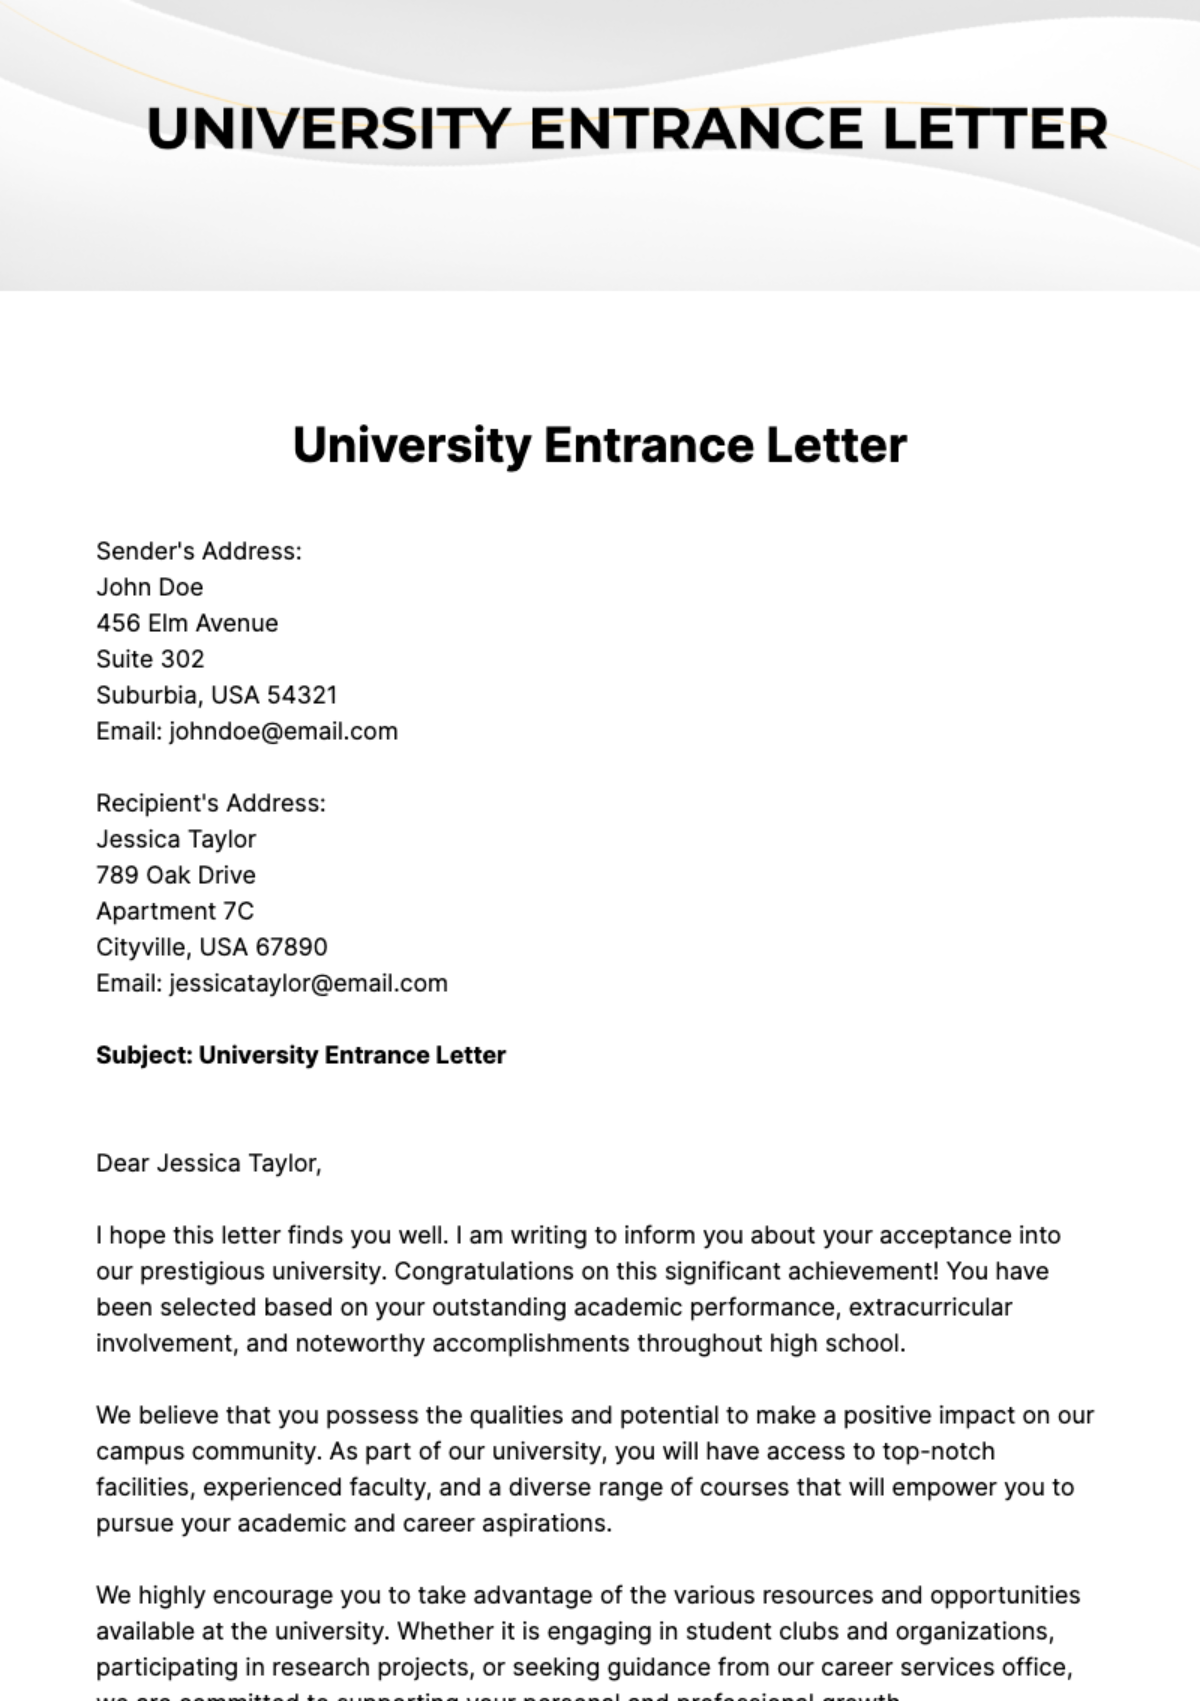 University Entrance Letter Template